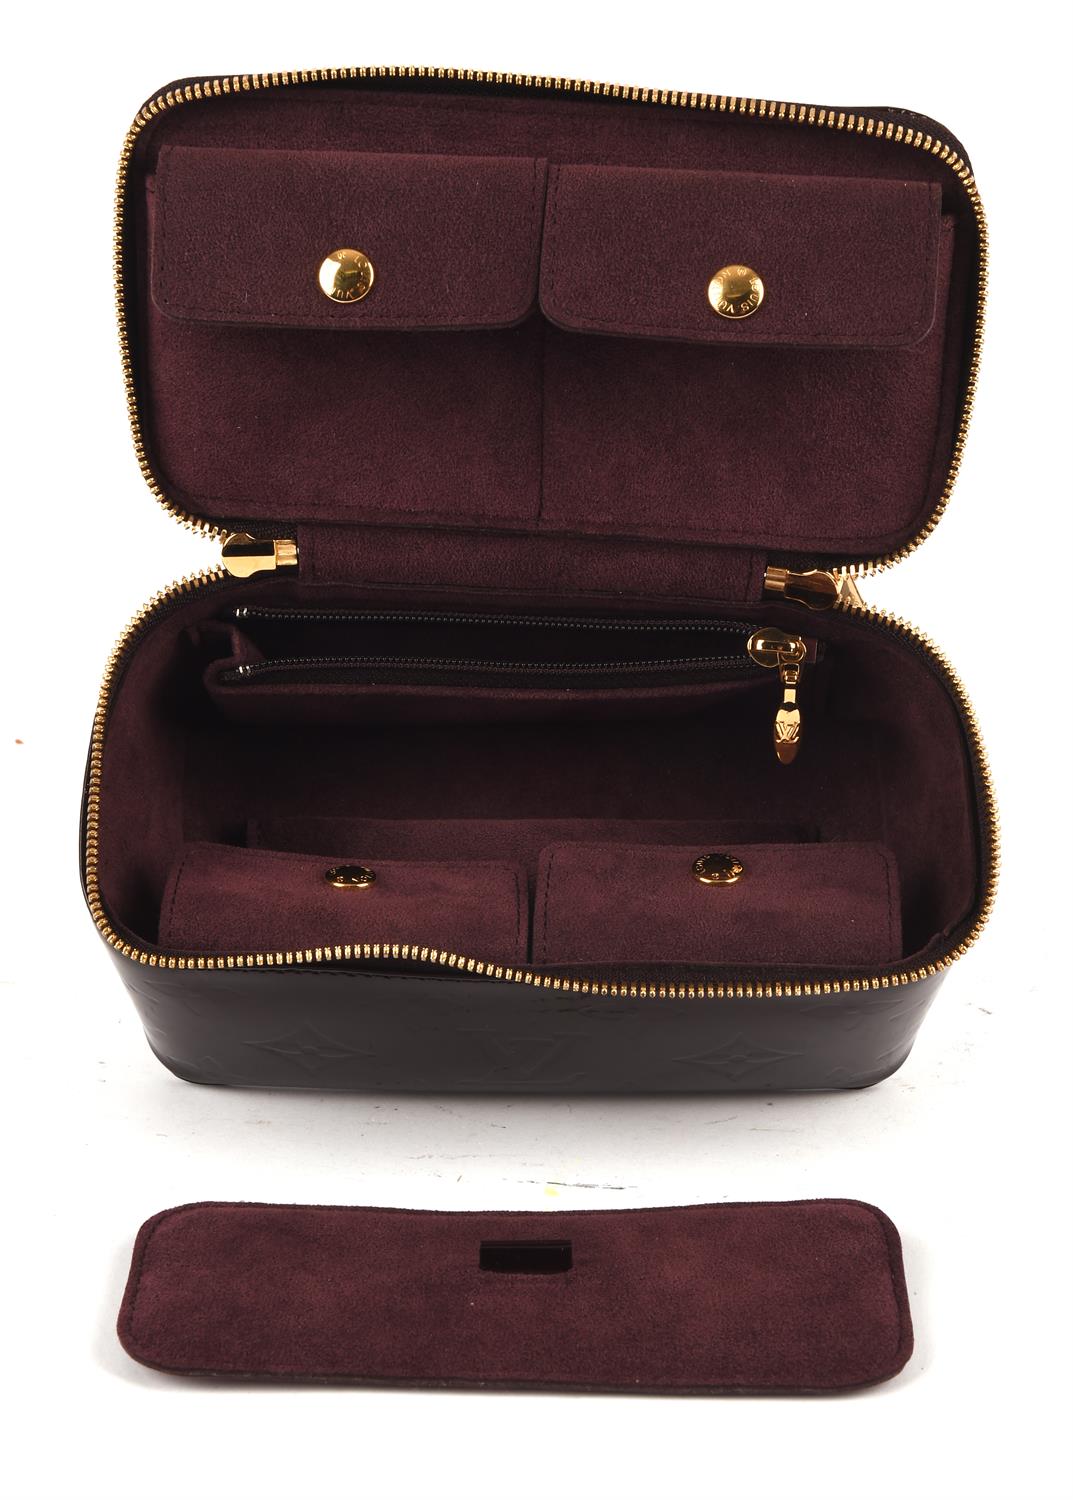 LOUIS VUITTON Burgundy monogram Vernis varnished calf leather jewel travel case (15cm x 7cm x 8cm) - Image 4 of 4